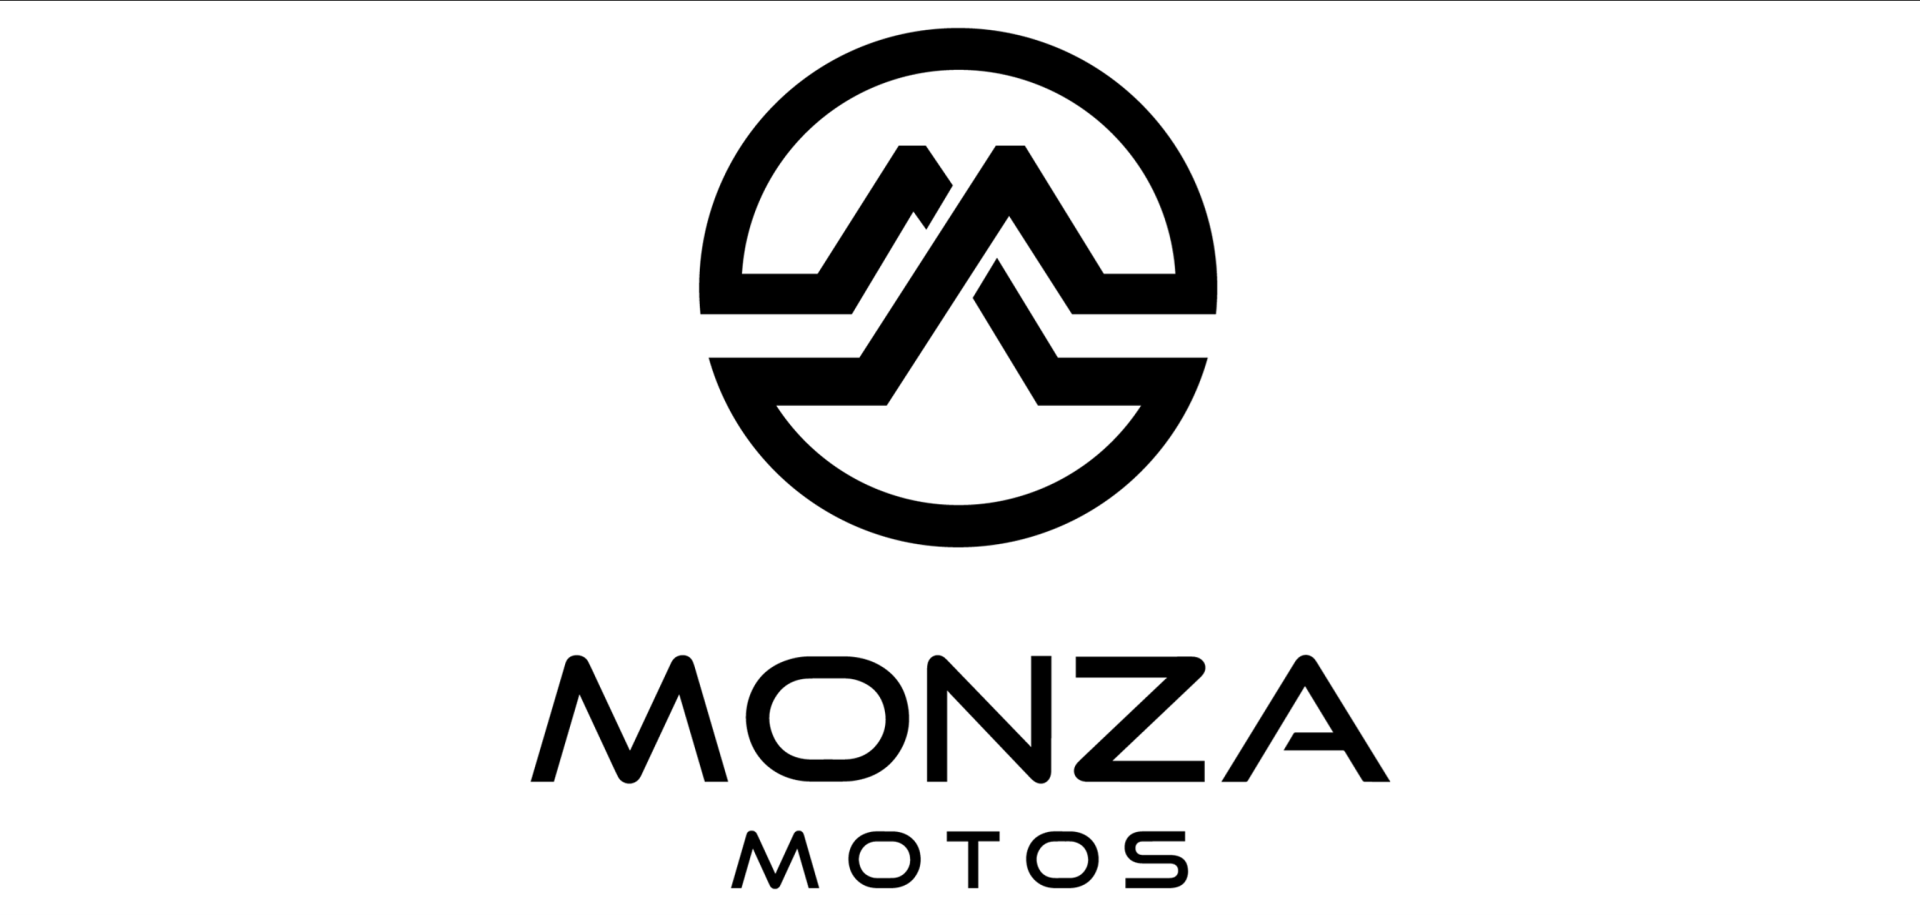 monza-motos-monza moos.png